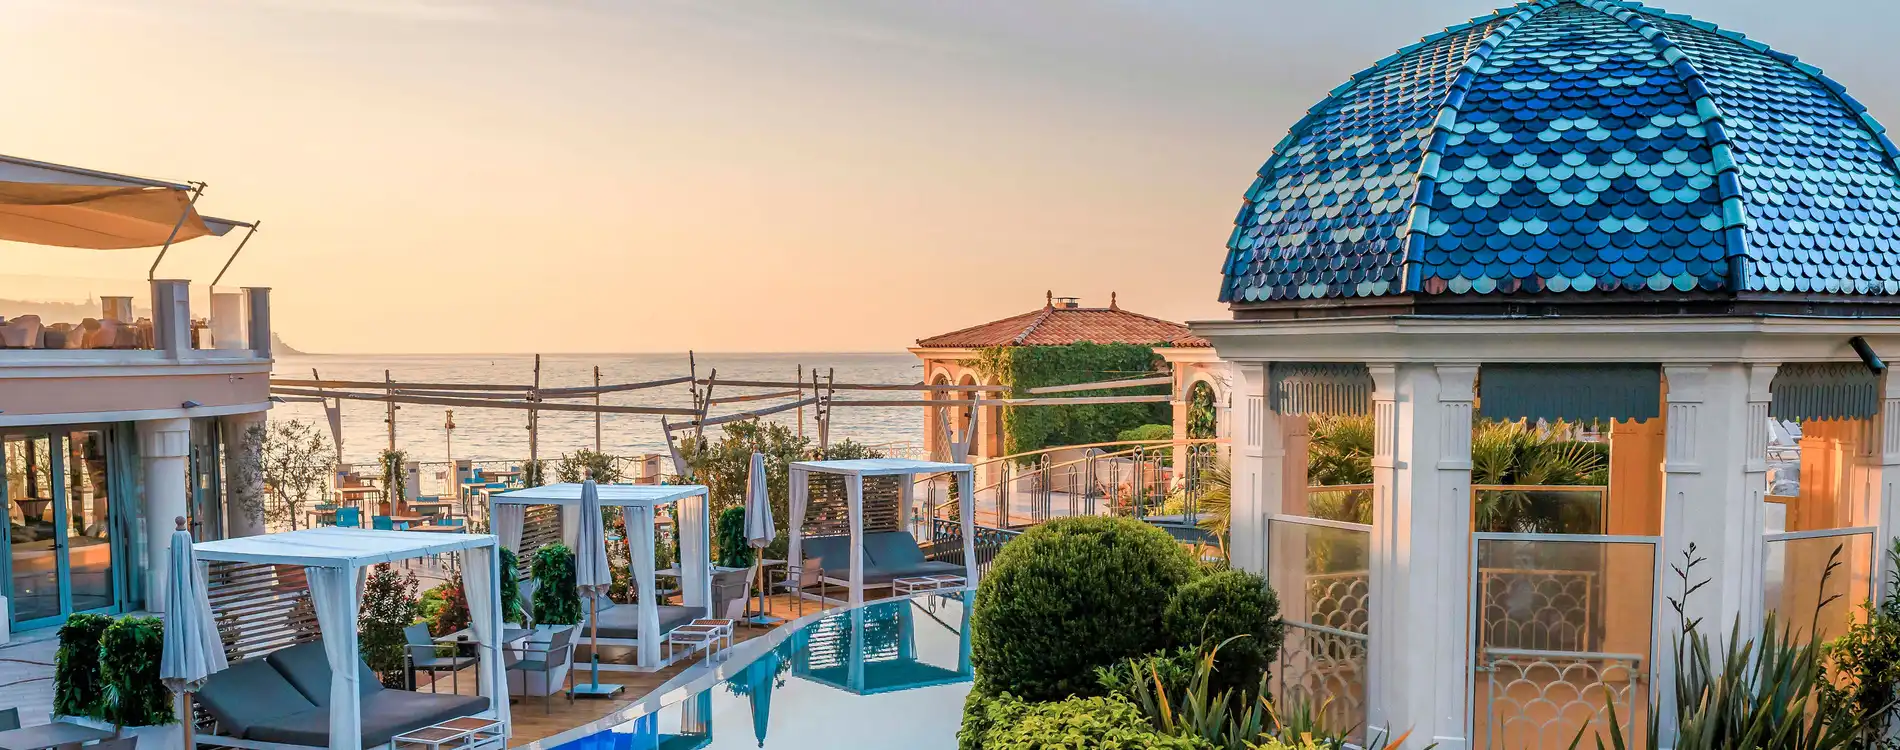 Monte-Carlo Bay Hotel and Resort